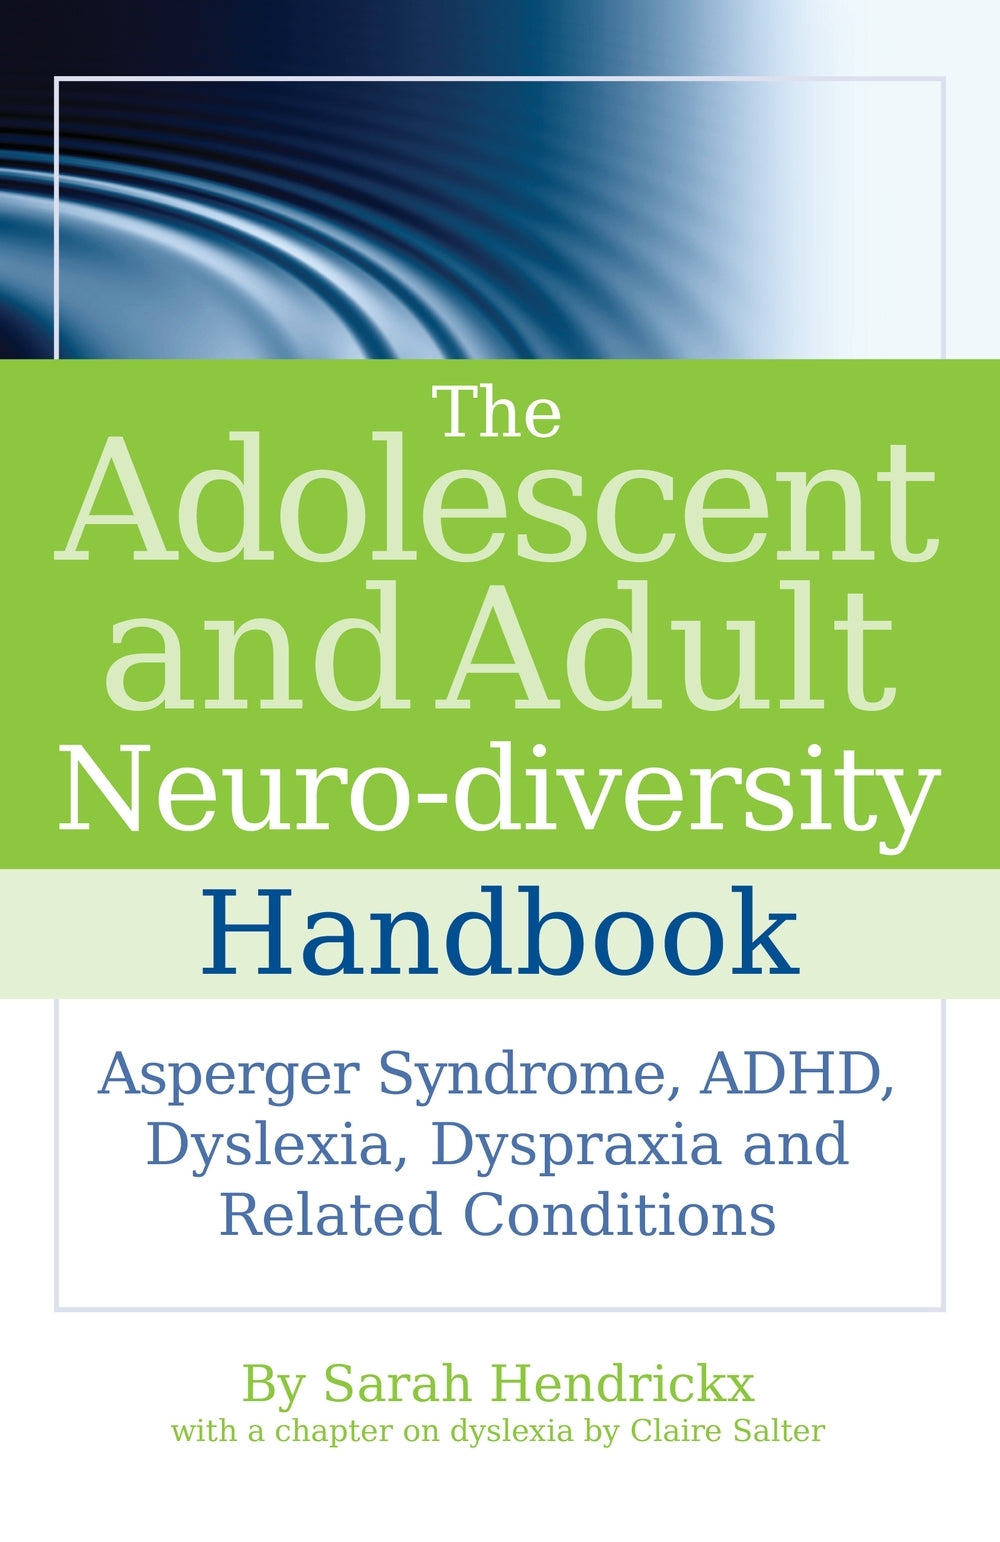 The Adolescent and Adult Neuro-diversity Handbook by Sarah Hendrickx